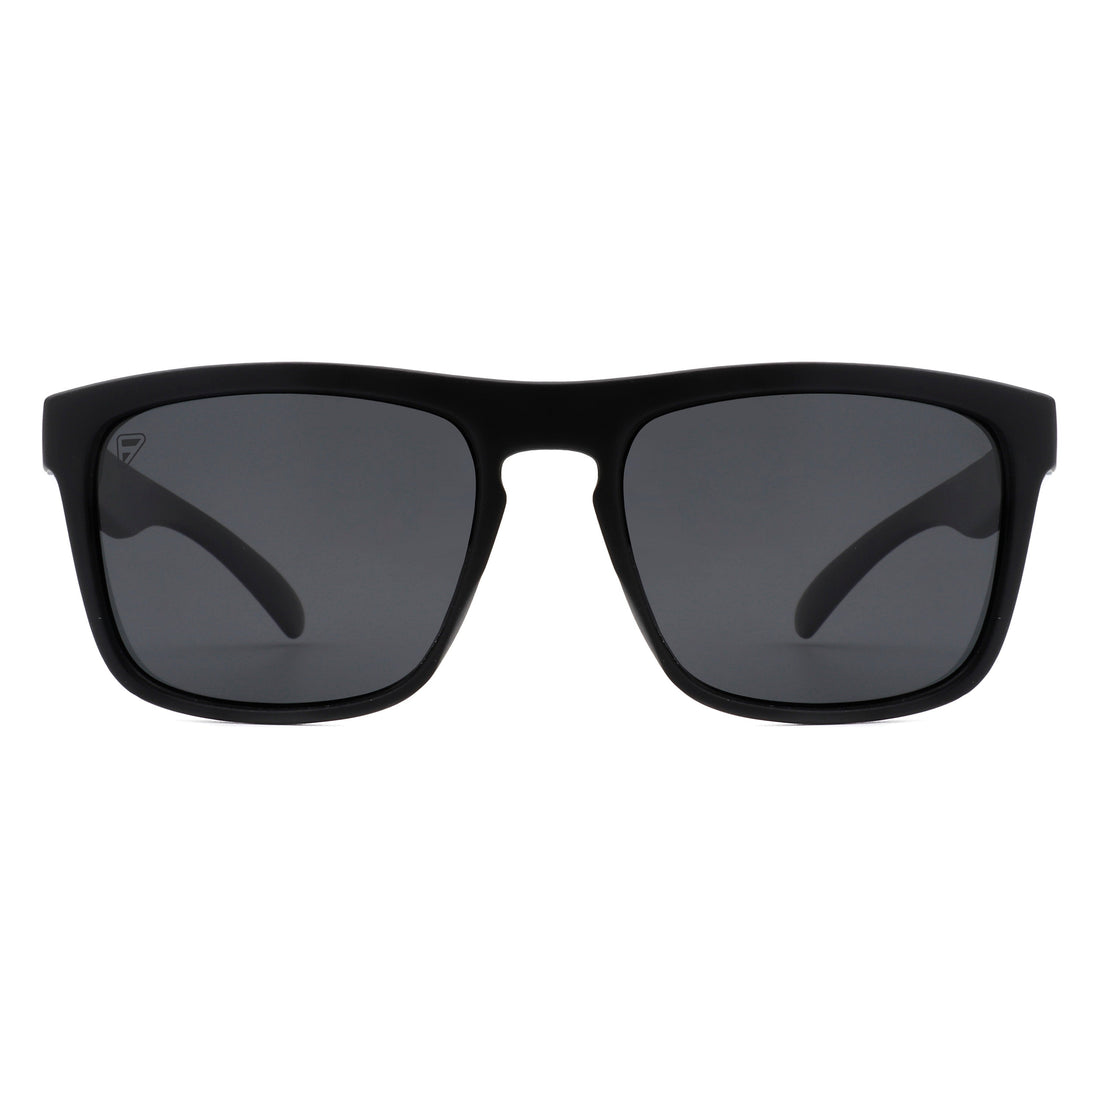 pomona rx sunglasses